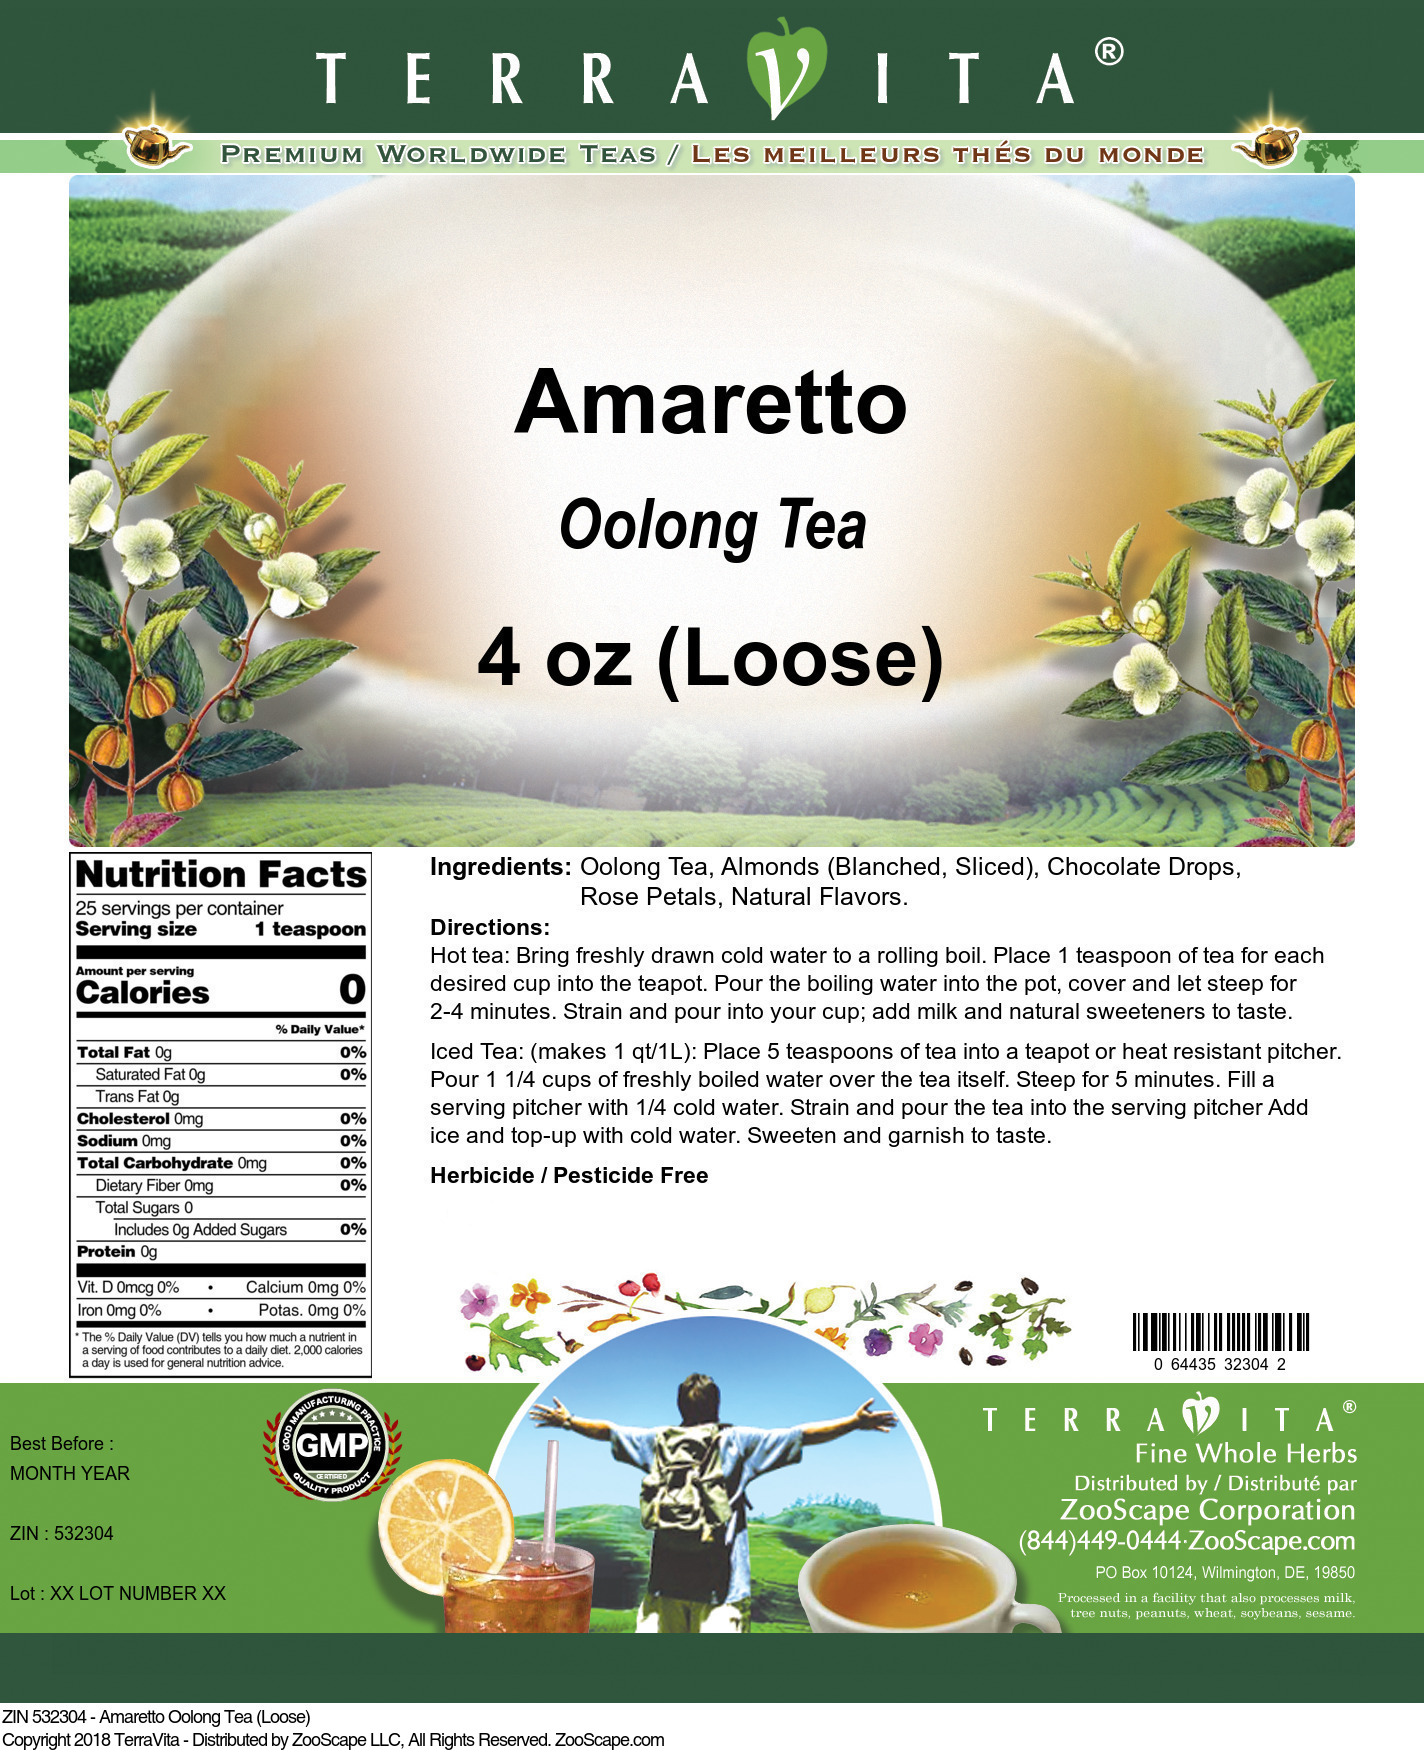 Amaretto Oolong Tea (Loose) - Label